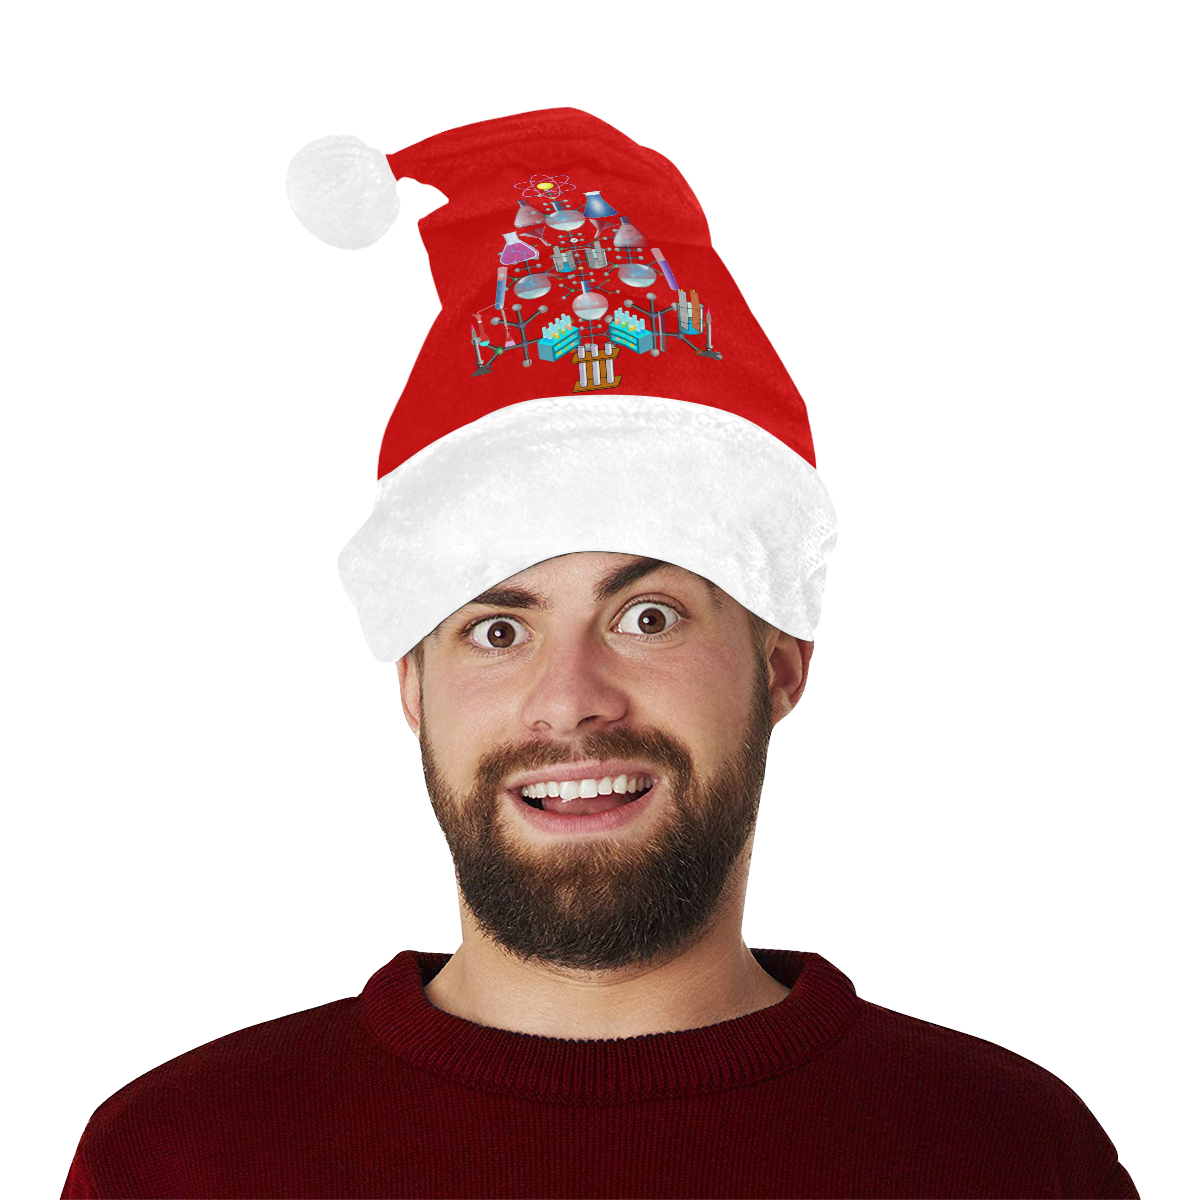 Oh Chemist Tree, Oh Chemistry, Science Christmas Red Santa Hat